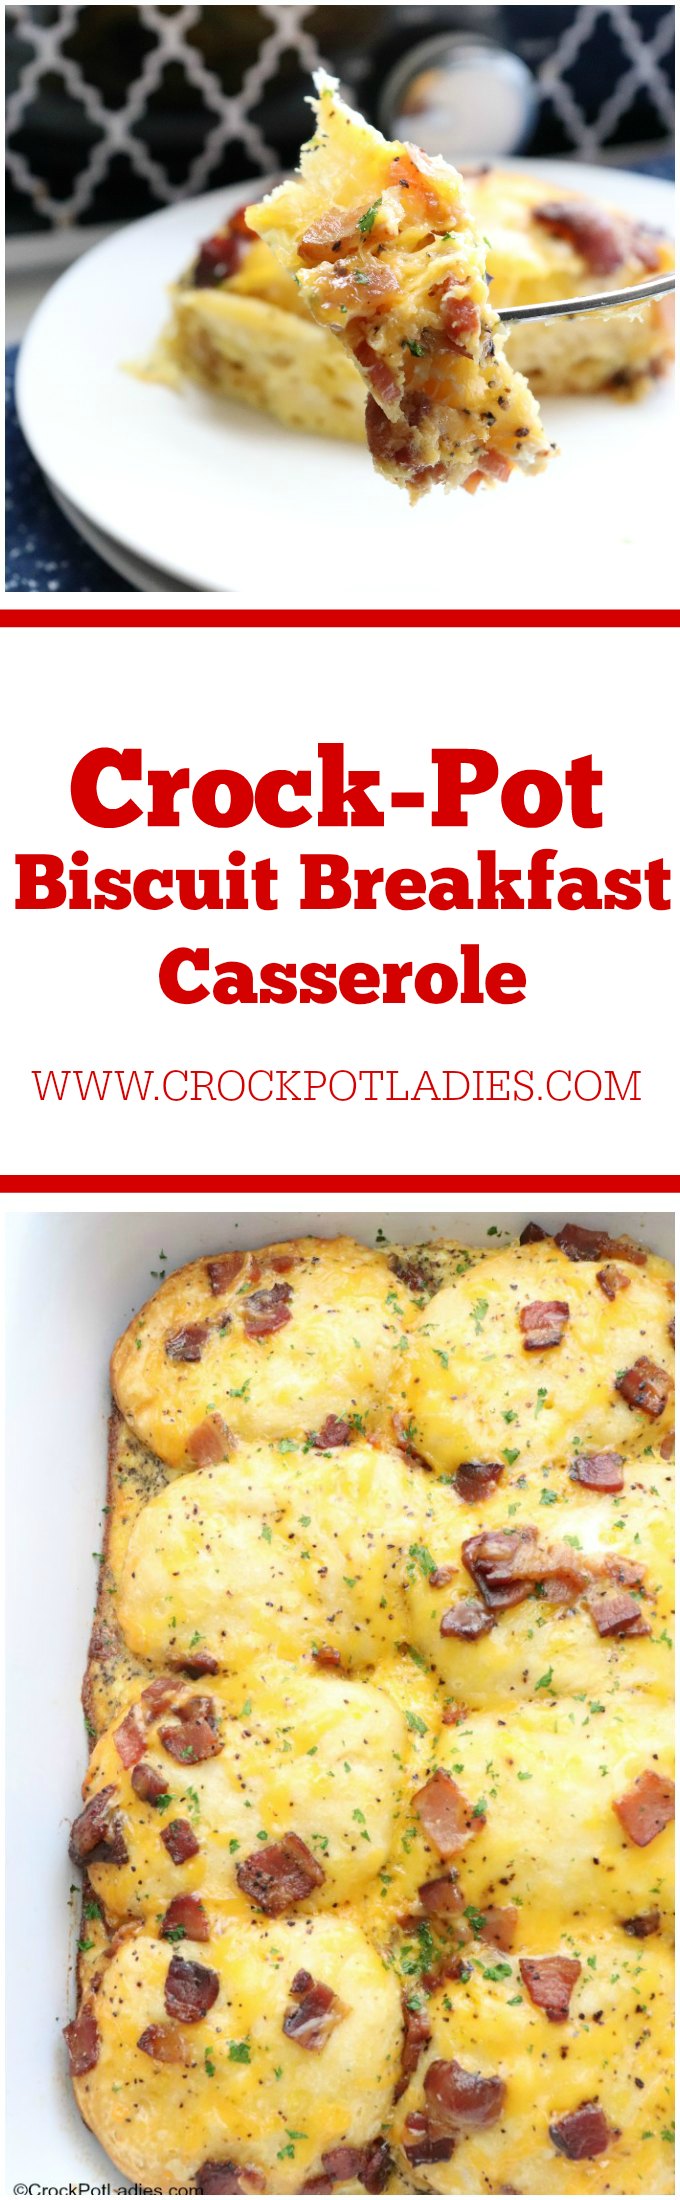 Crock-Pot Biscuit Breakfast Casserole